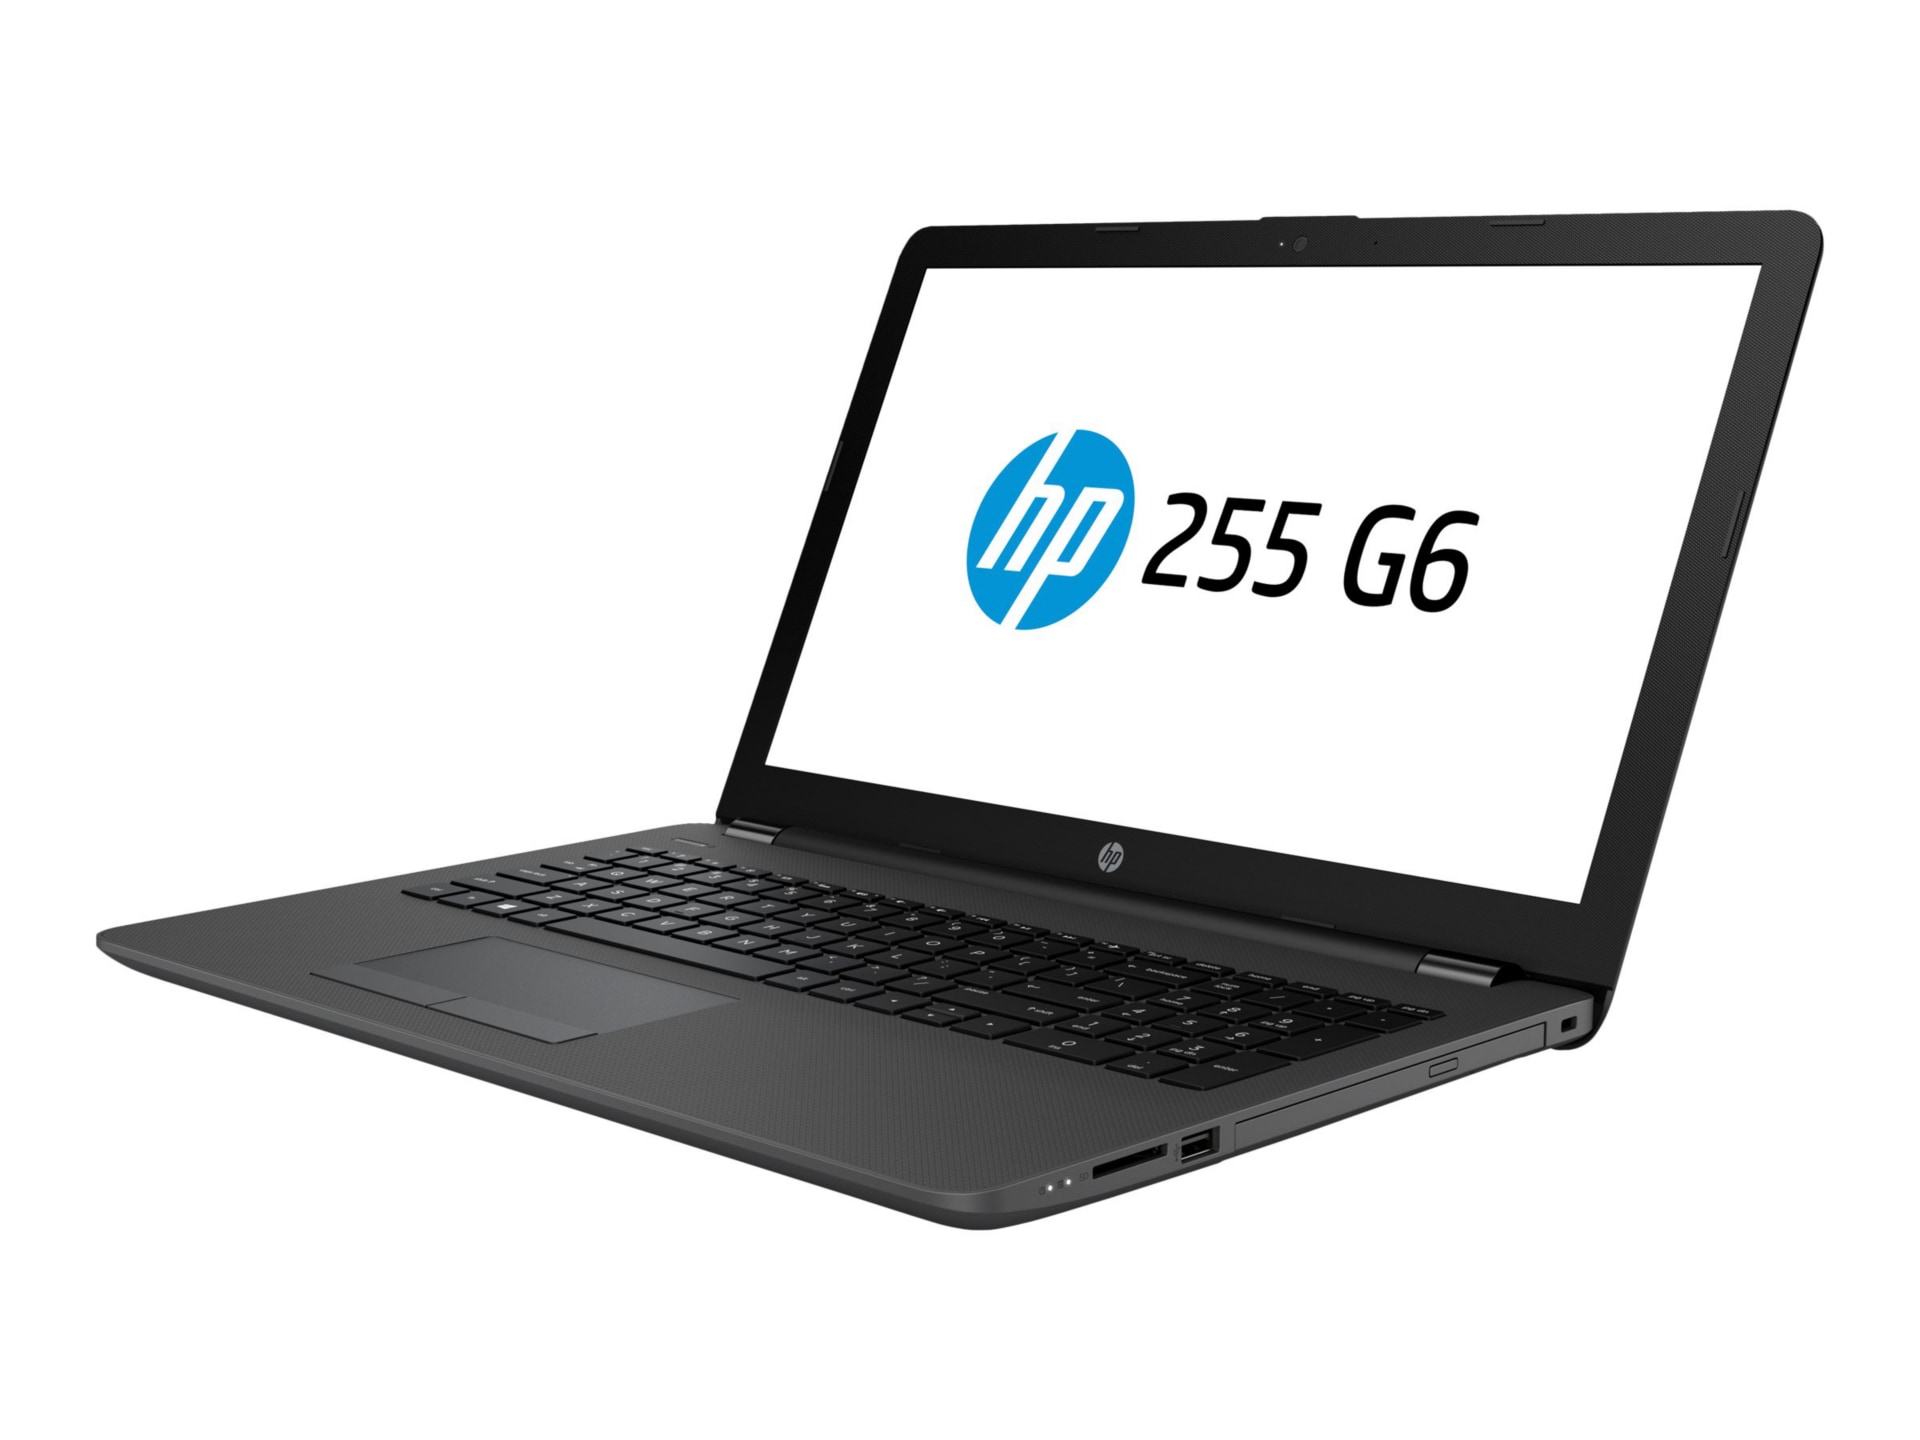 HP 255 G6 - 15.6" - E2 9000e - 4 GB RAM - 500 GB HDD - US